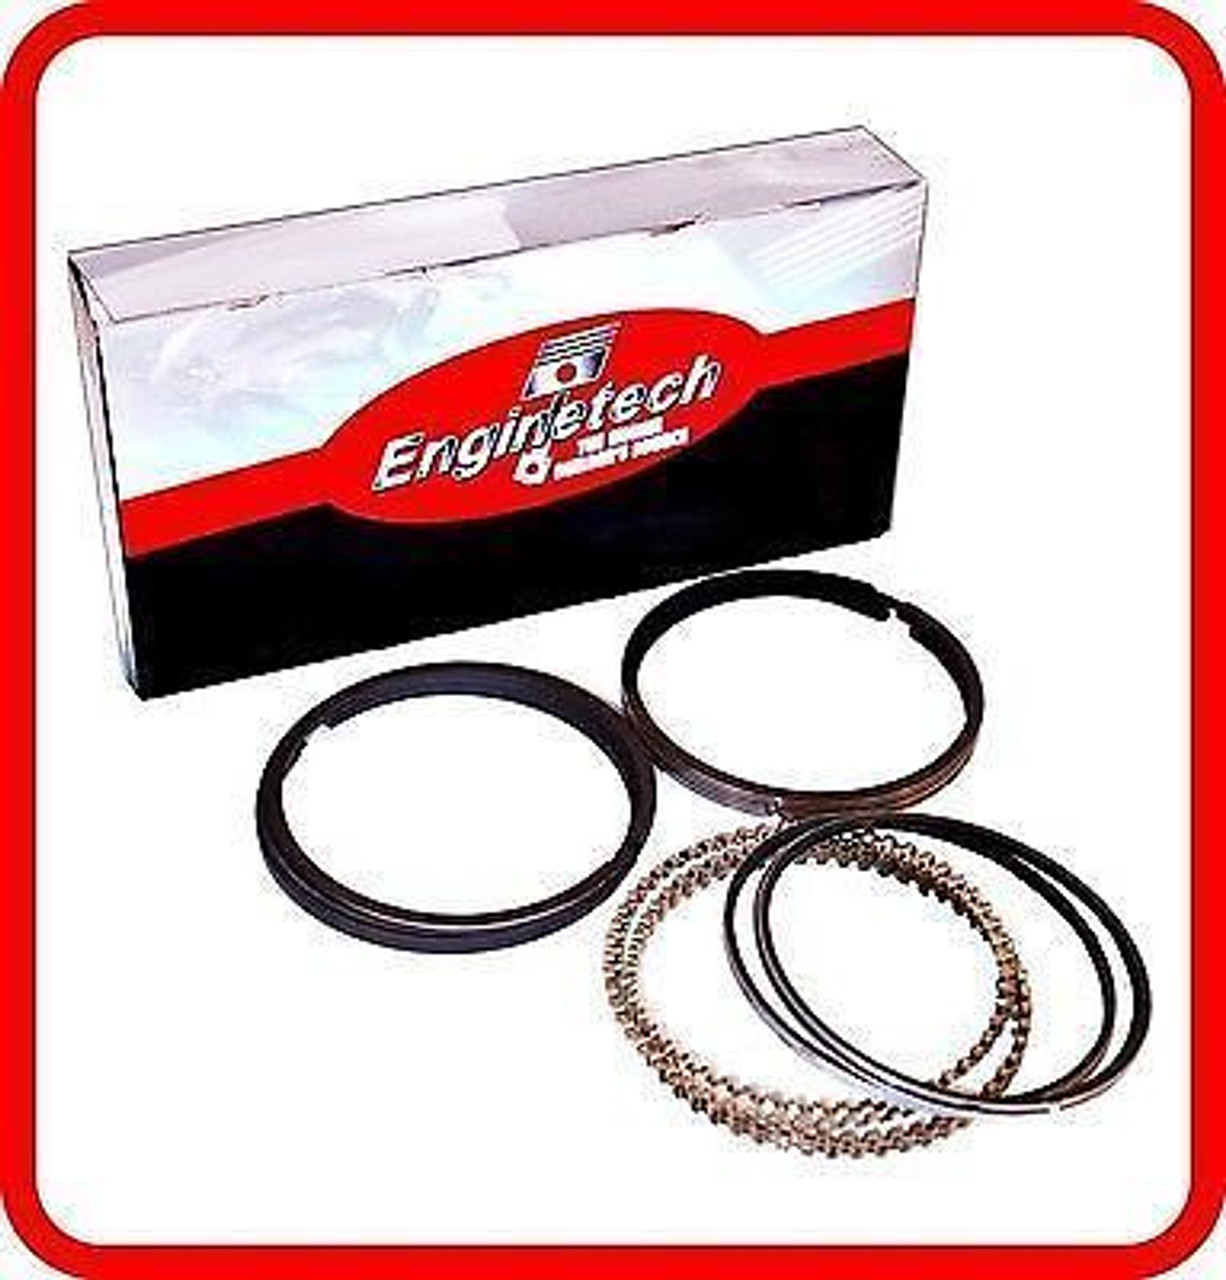 Engine Piston Ring Set - Kit Part - S96904